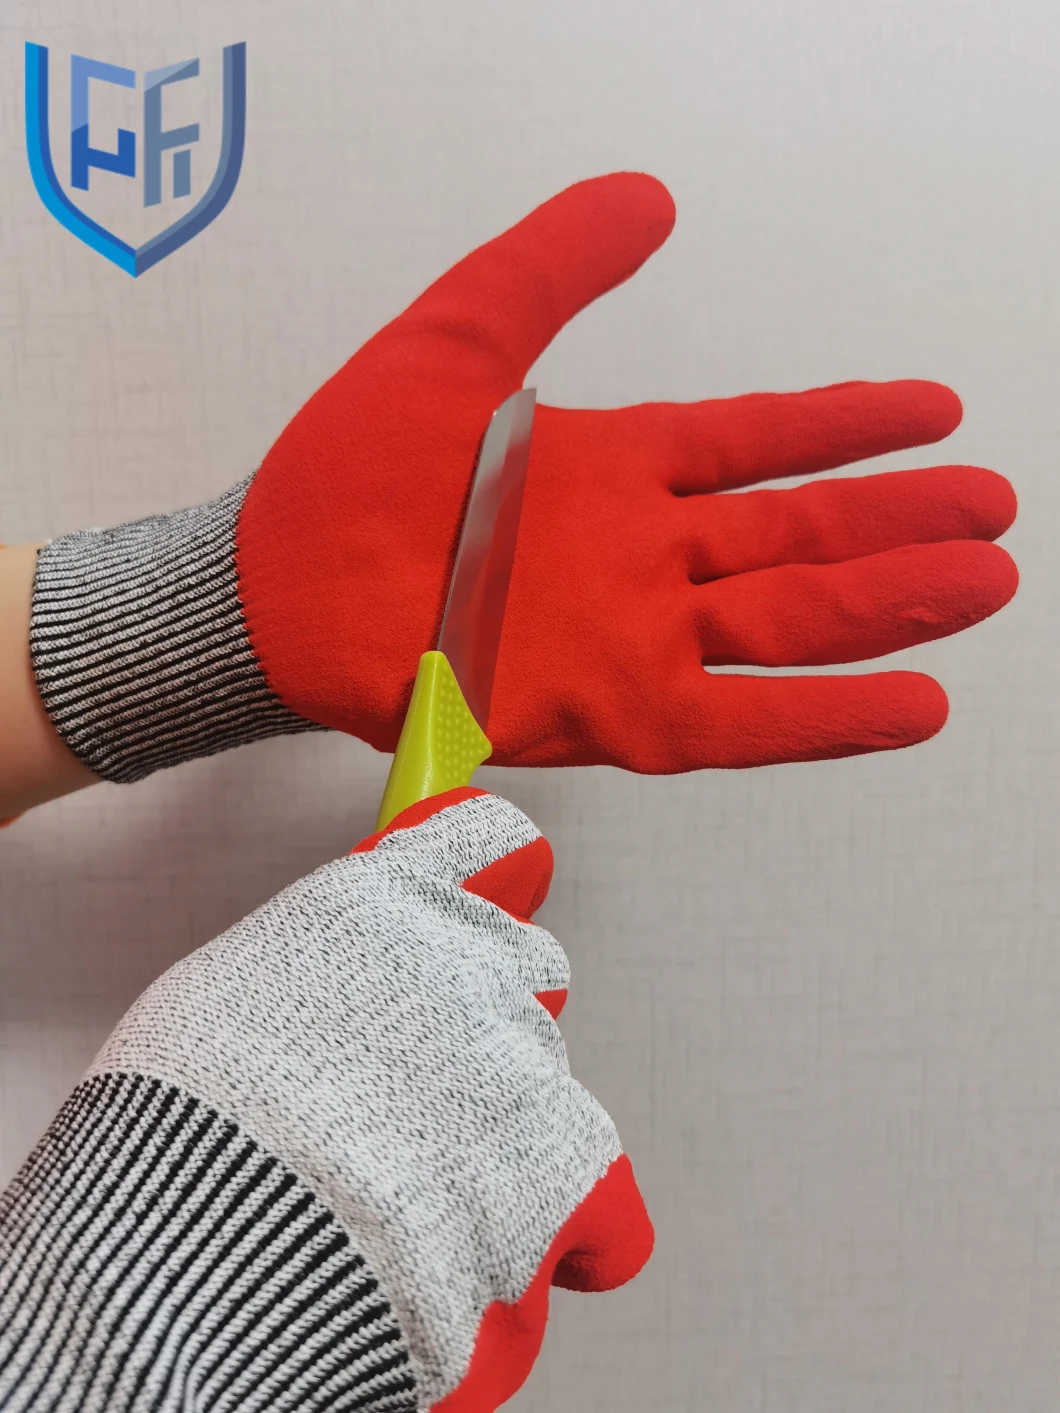 High Quality 13 Gauge Hppe Cut Resistant Palm Coating Nitrile Sandy Safety Work Hand Gloves